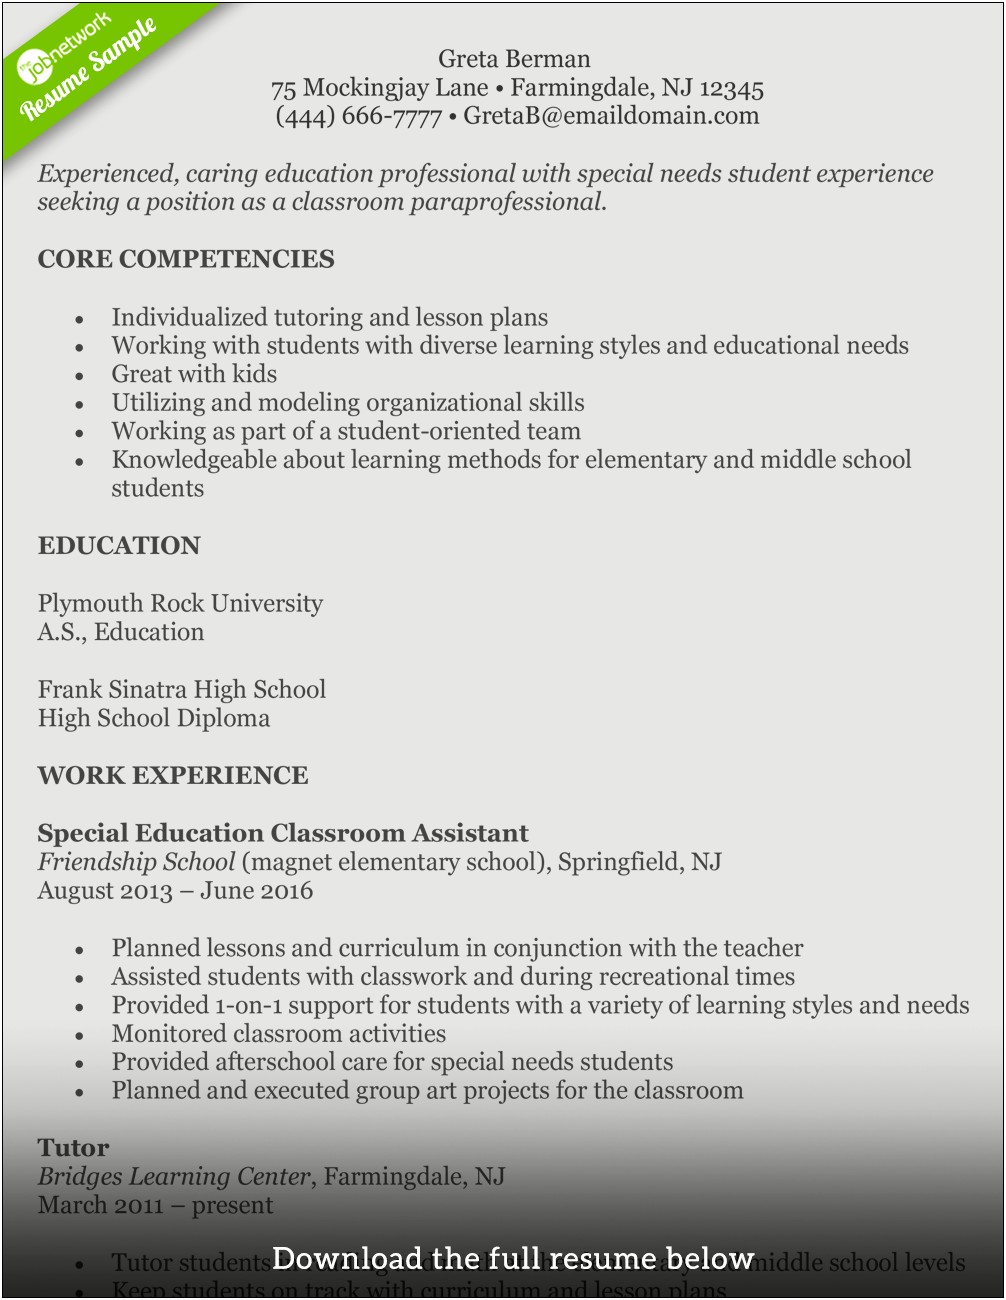 Sample Resume For High School Teaching Position